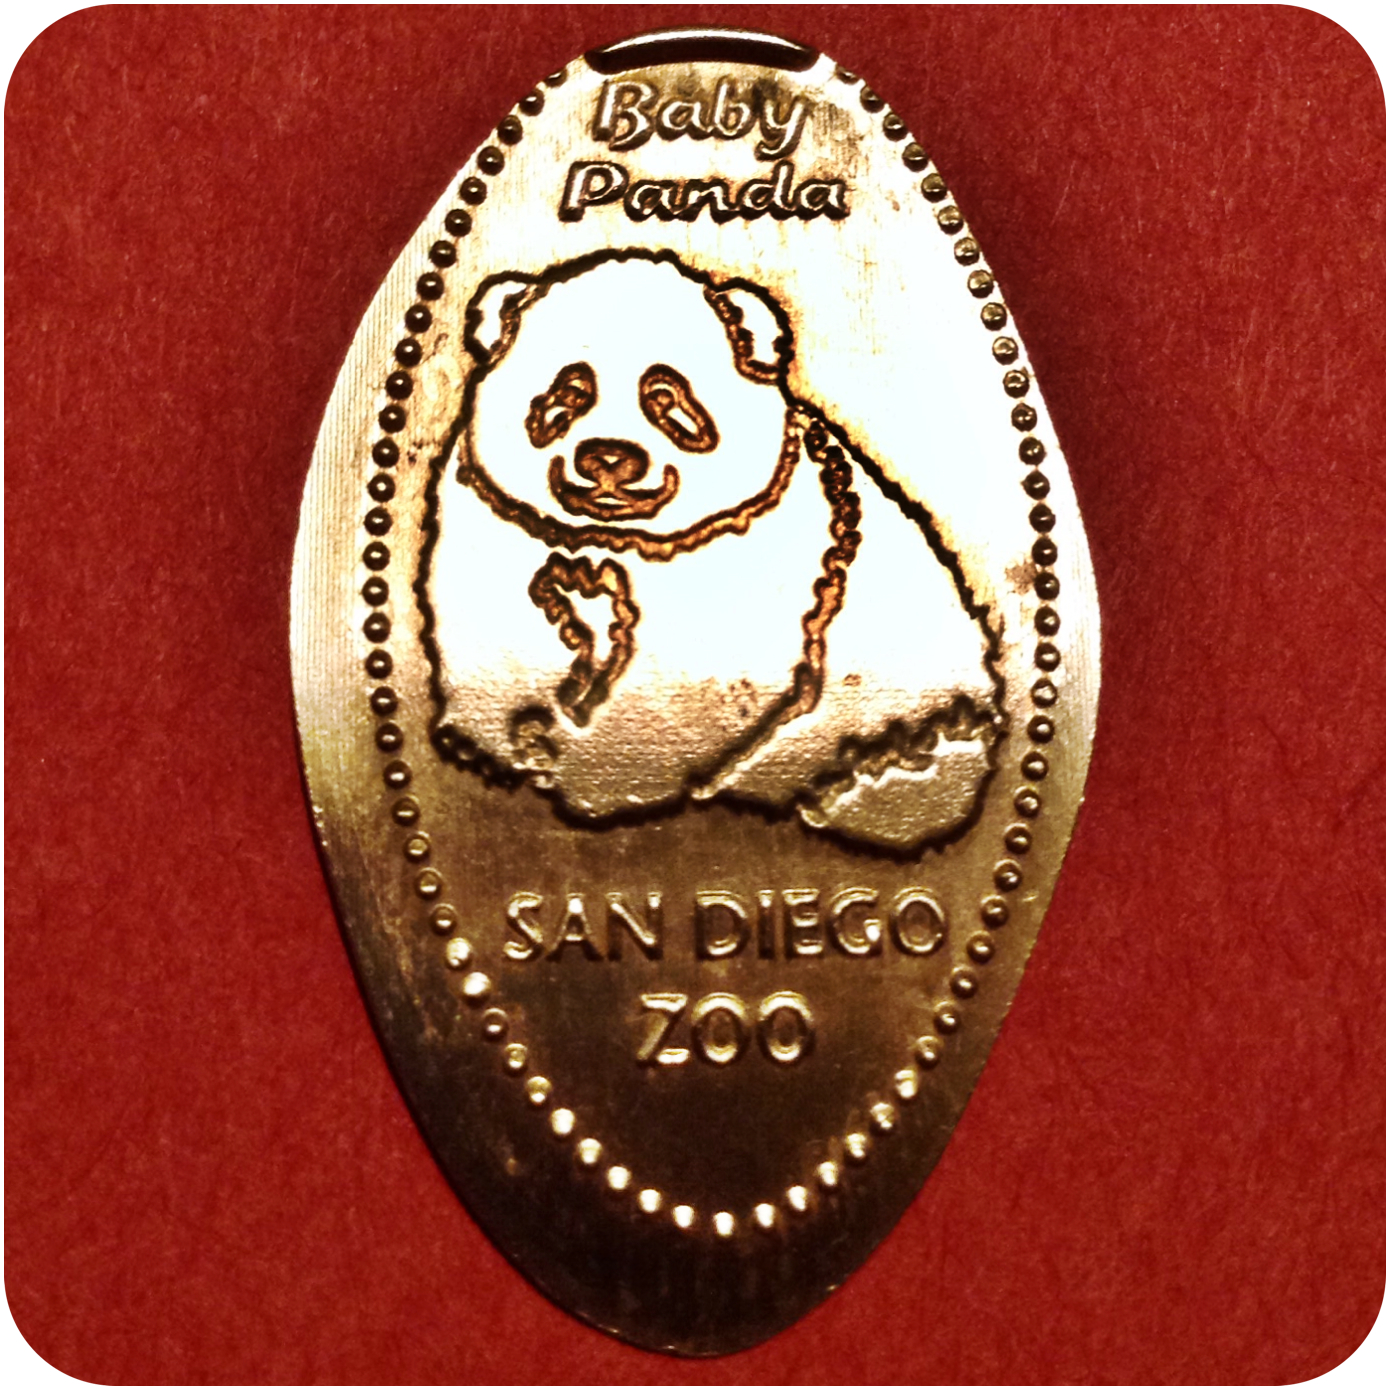 Baby Panda - Asian Passage, San Diego Zoo - Balboa Park, California Copper Penny